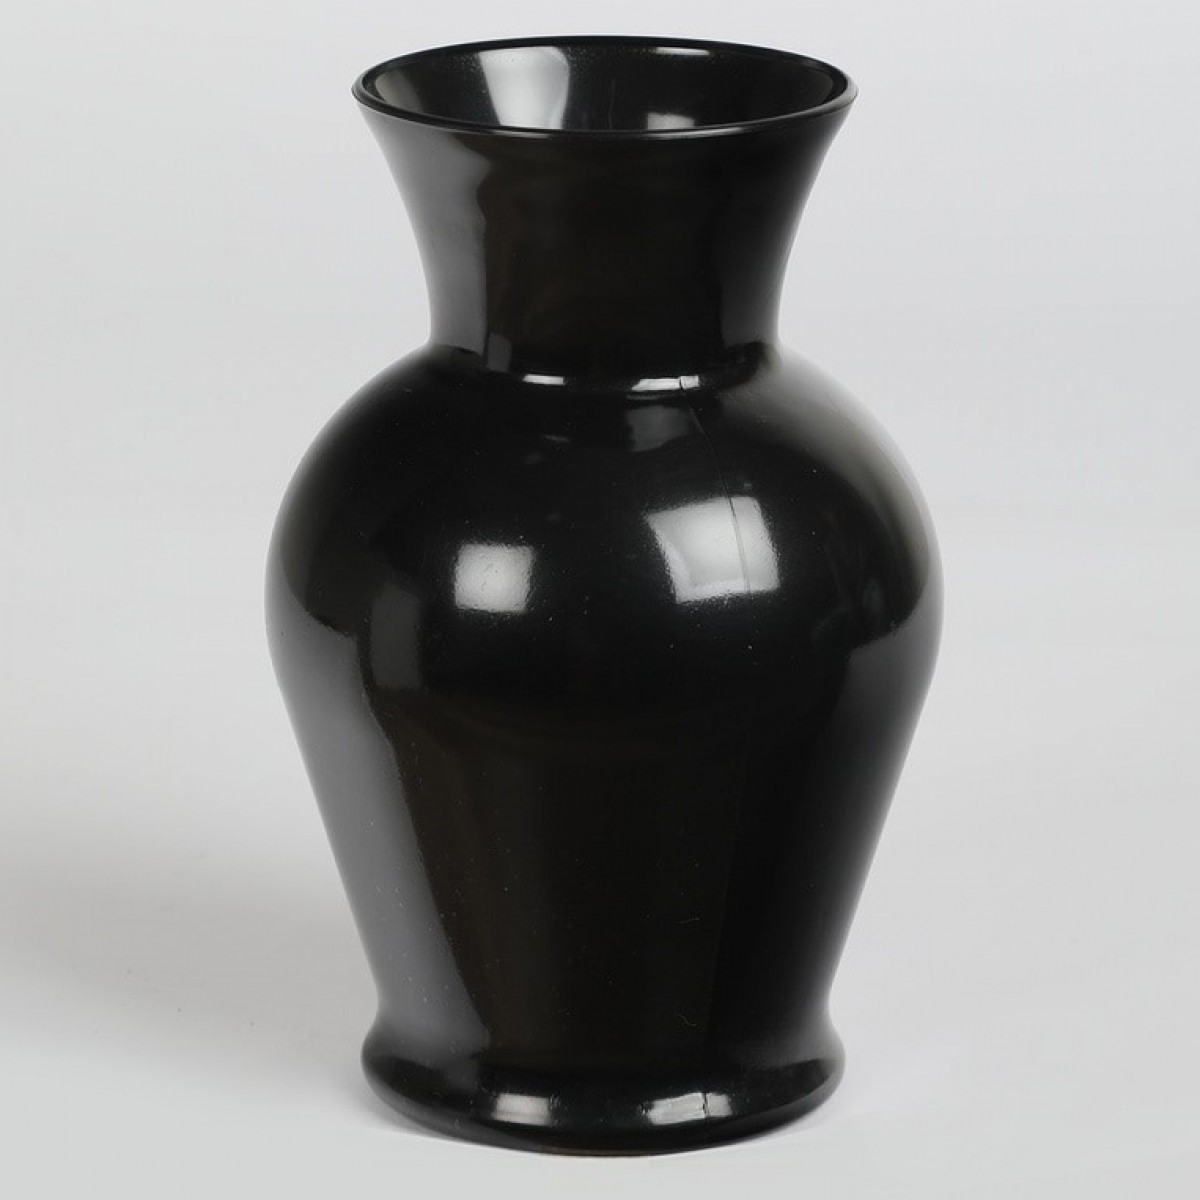 5107 Classic Urn Black 8.5x18cm Acrylic Vase - 1 No